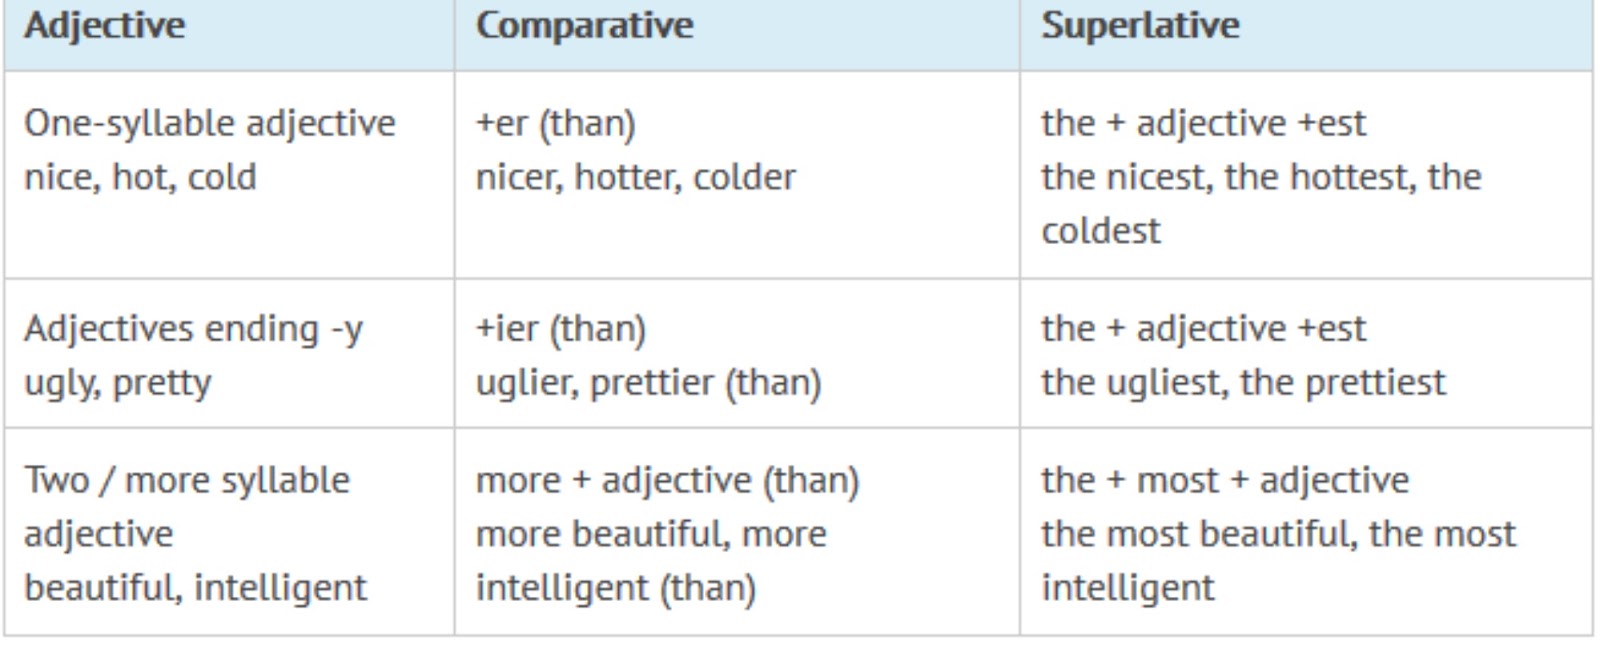 Adjective comparative superlative intelligent. Comparatives and Superlatives. Comparative and Superlative adjectives исключения. Грамматика Comparatives. Comparatives and Superlatives исключения.